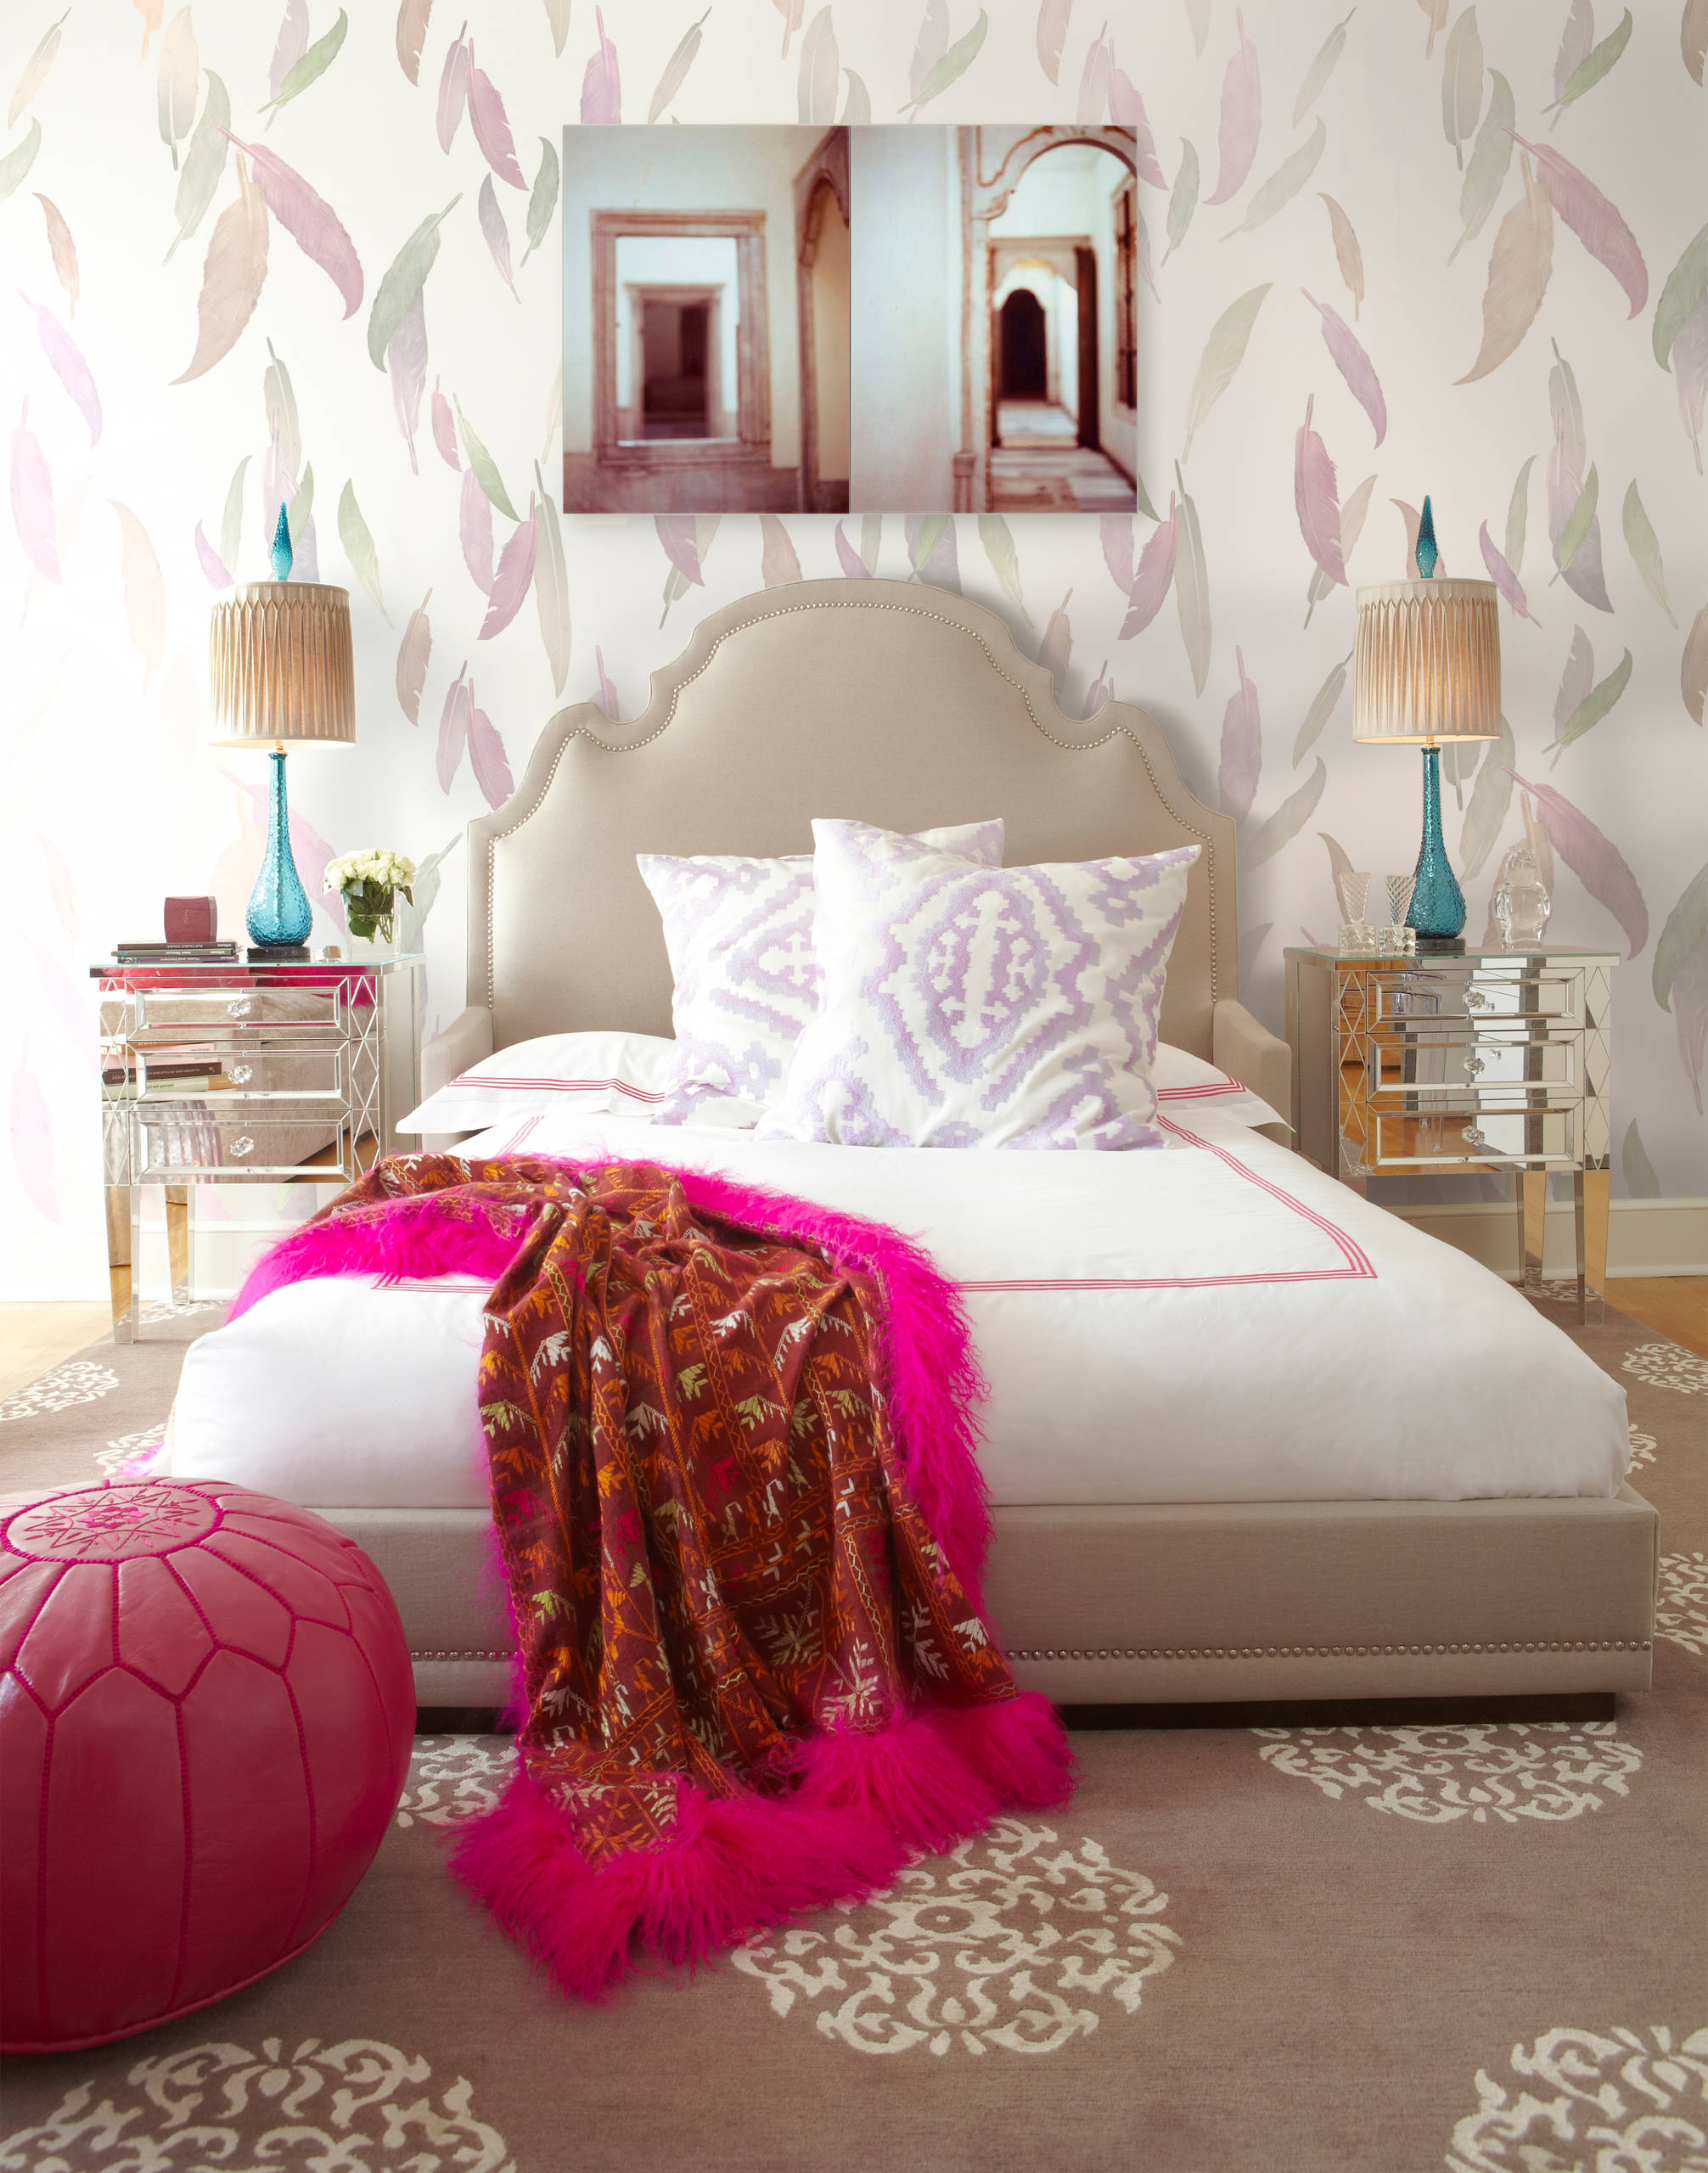 Master Bedroom Wallpaper - Photos & Ideas | Houzz